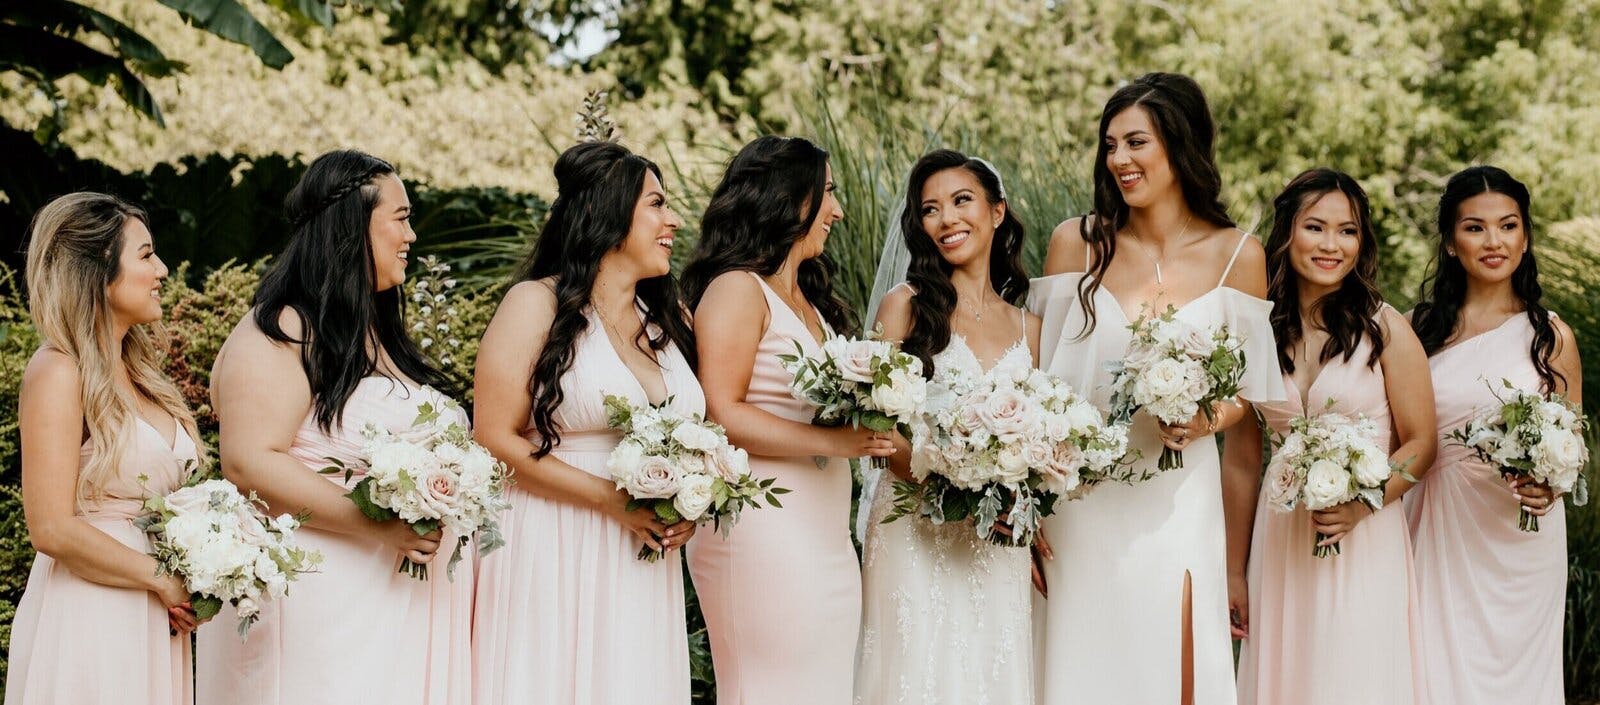 Cassandra with her bridesmaids